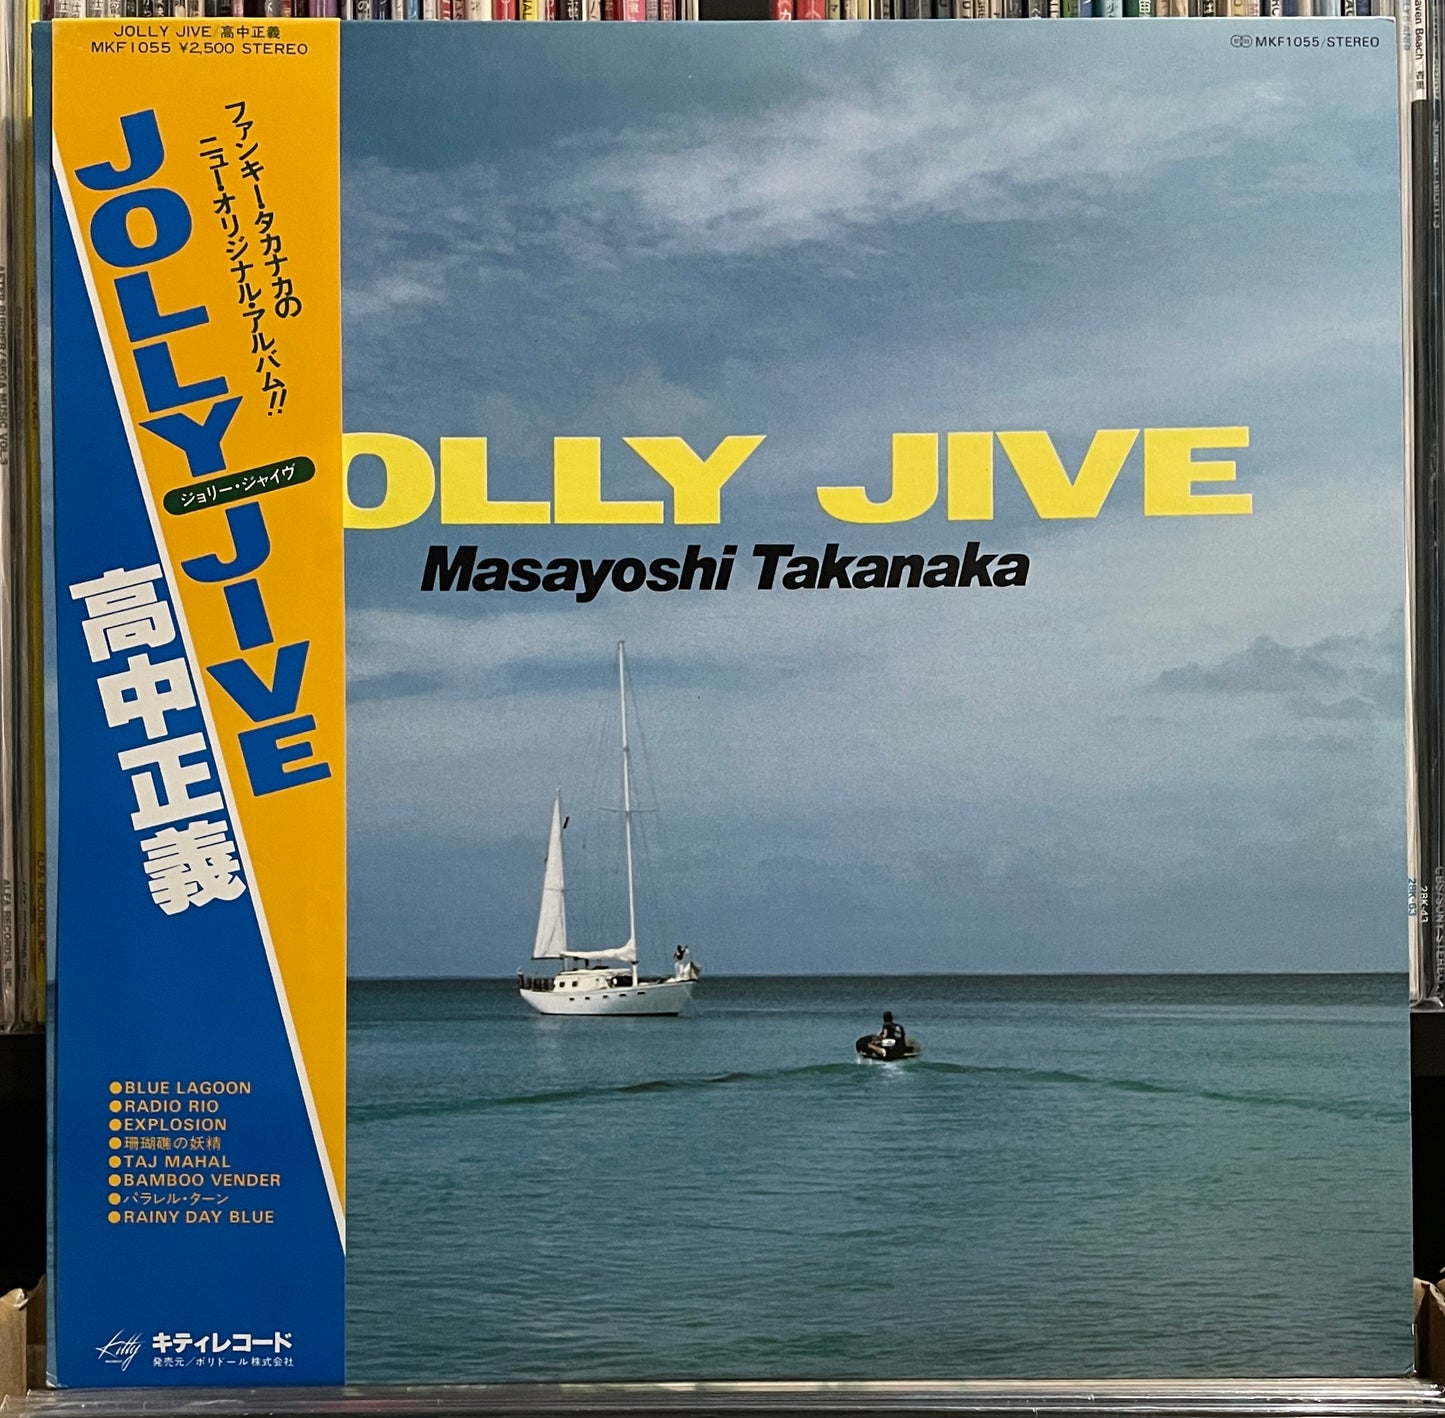 Masayoshi Takanaka “Jolly Jive” (1979)